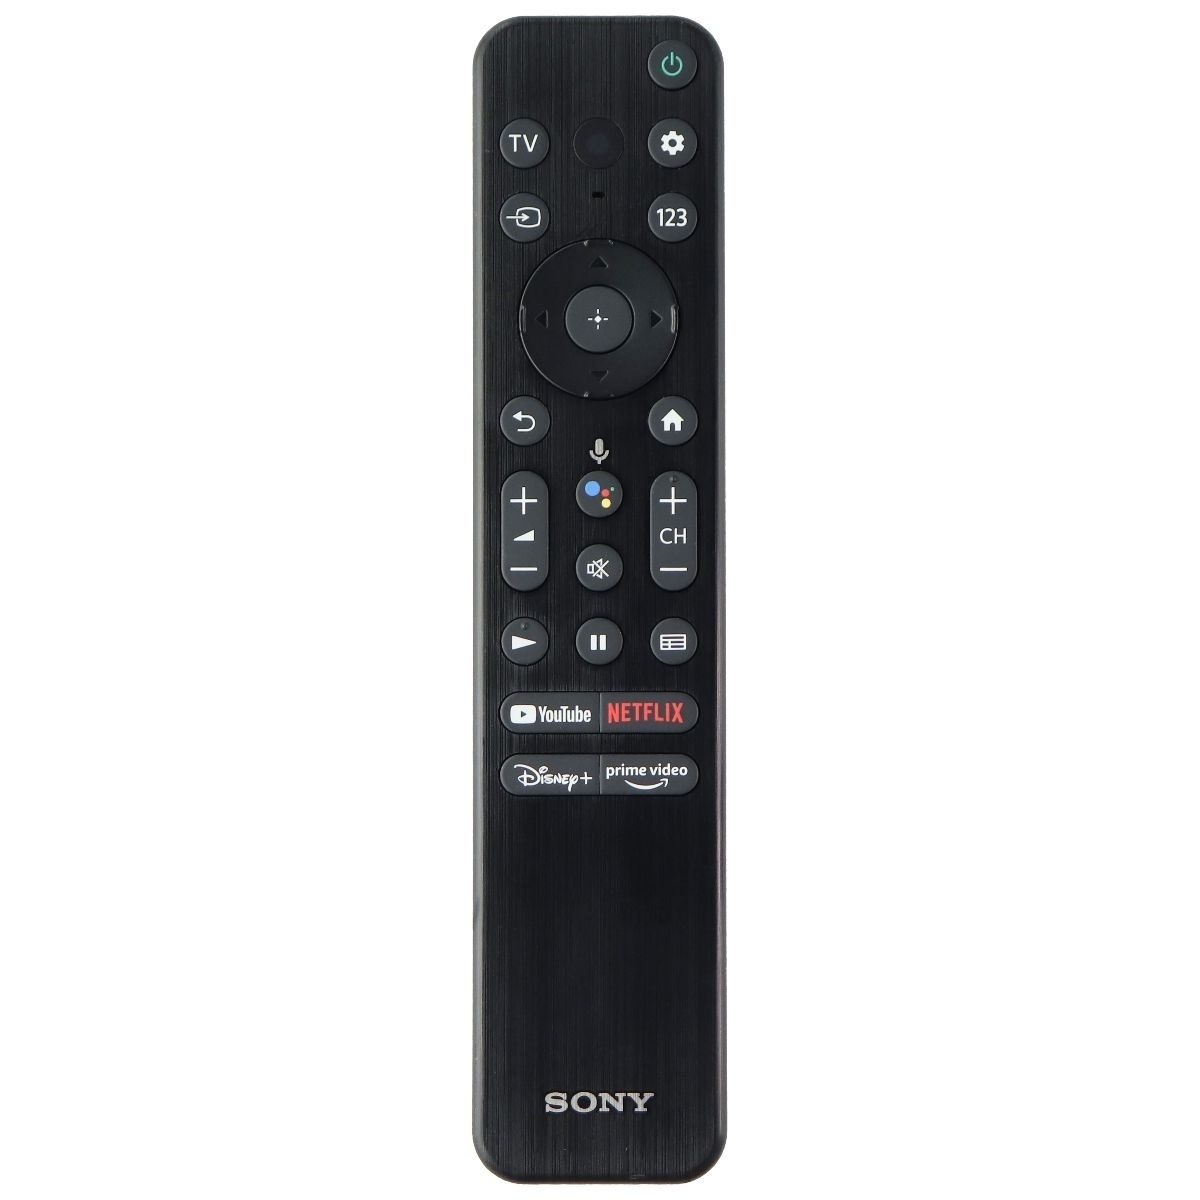 Sony OEM Remote Control For Select Sony TVs - Black (RMF-TX800U)